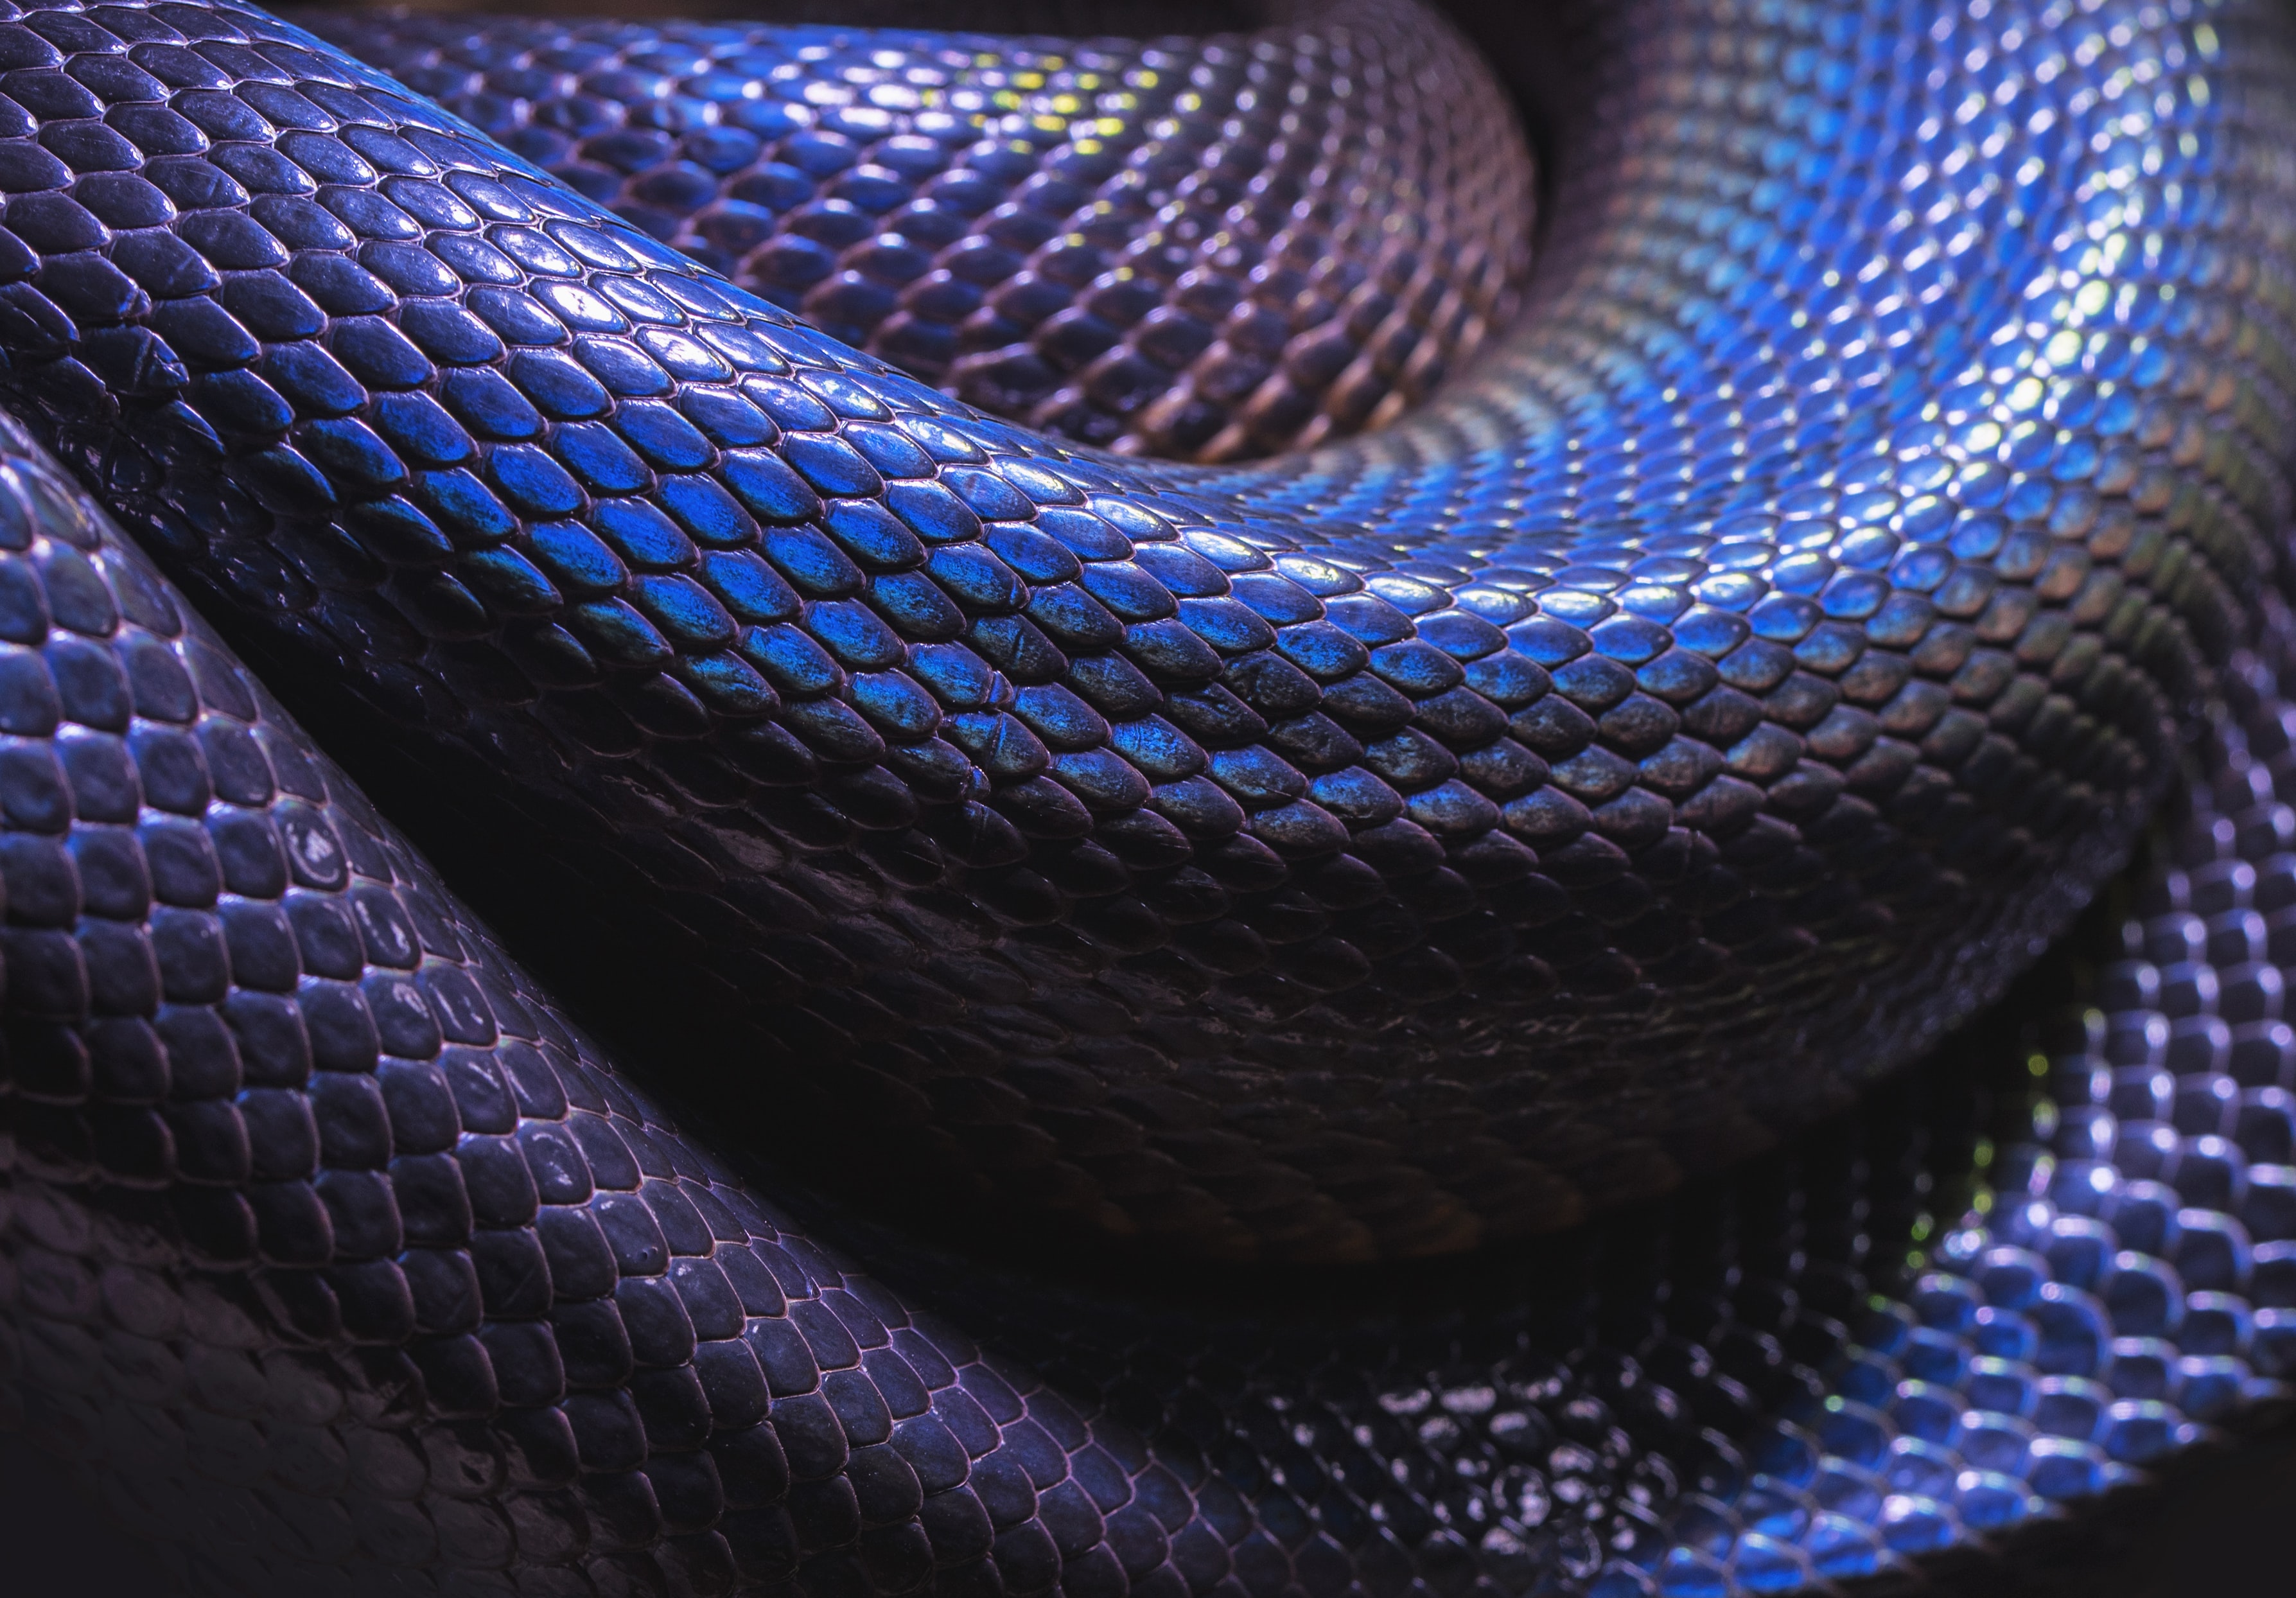 fond d'écran de serpent,bleu,violet,bleu cobalt,bleu électrique,violet